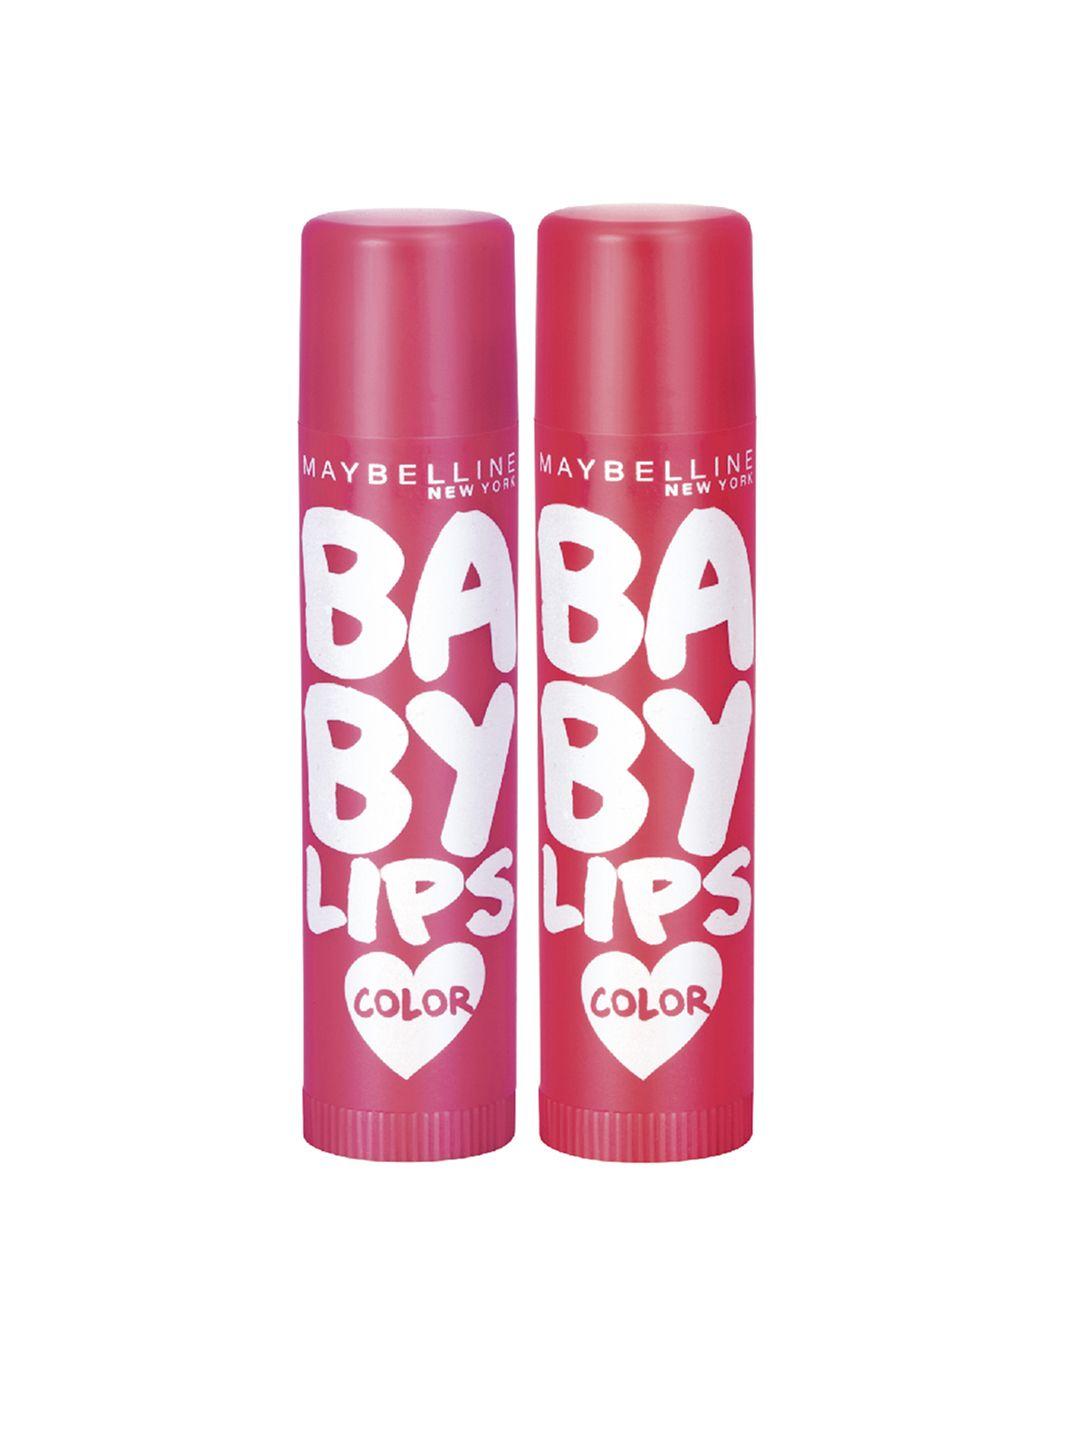 maybelline new york set of 2 baby lips colour balm - cherry kiss & berry crush